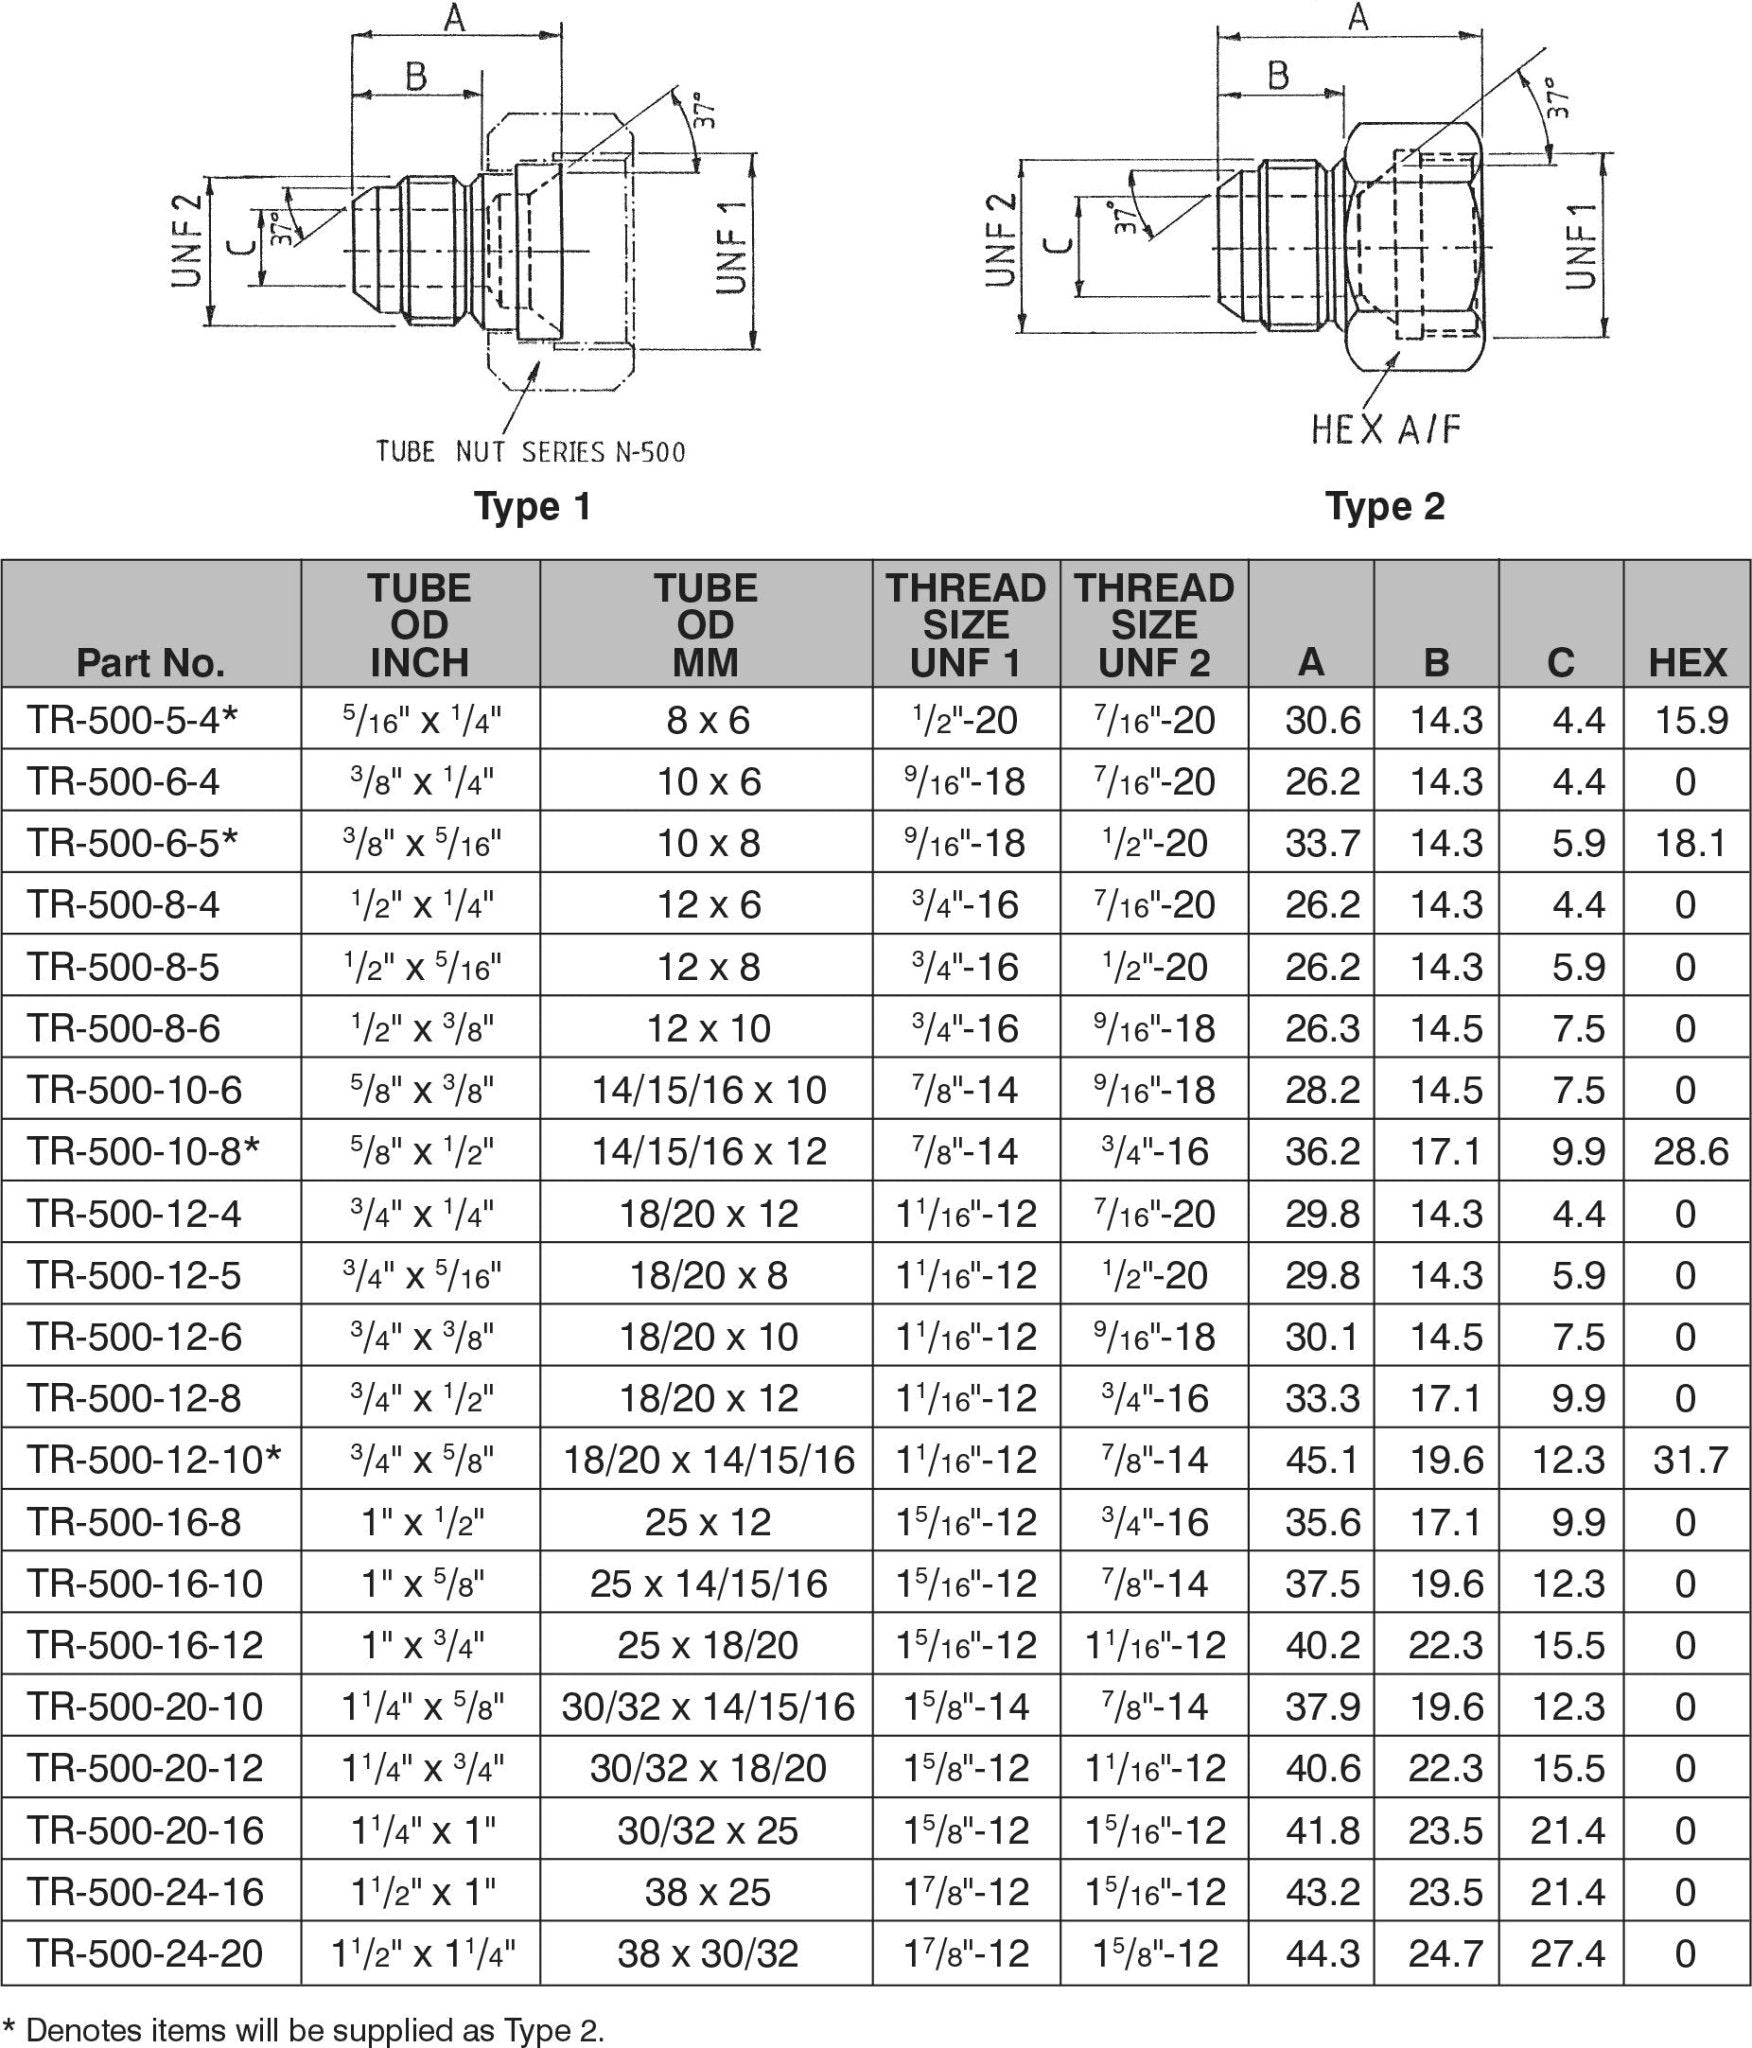 1.5/16"-12 x 7/8"-14 JIC TUBE END REDUCER TYPE 1.-TR-500-16-10 - Custom Fittings